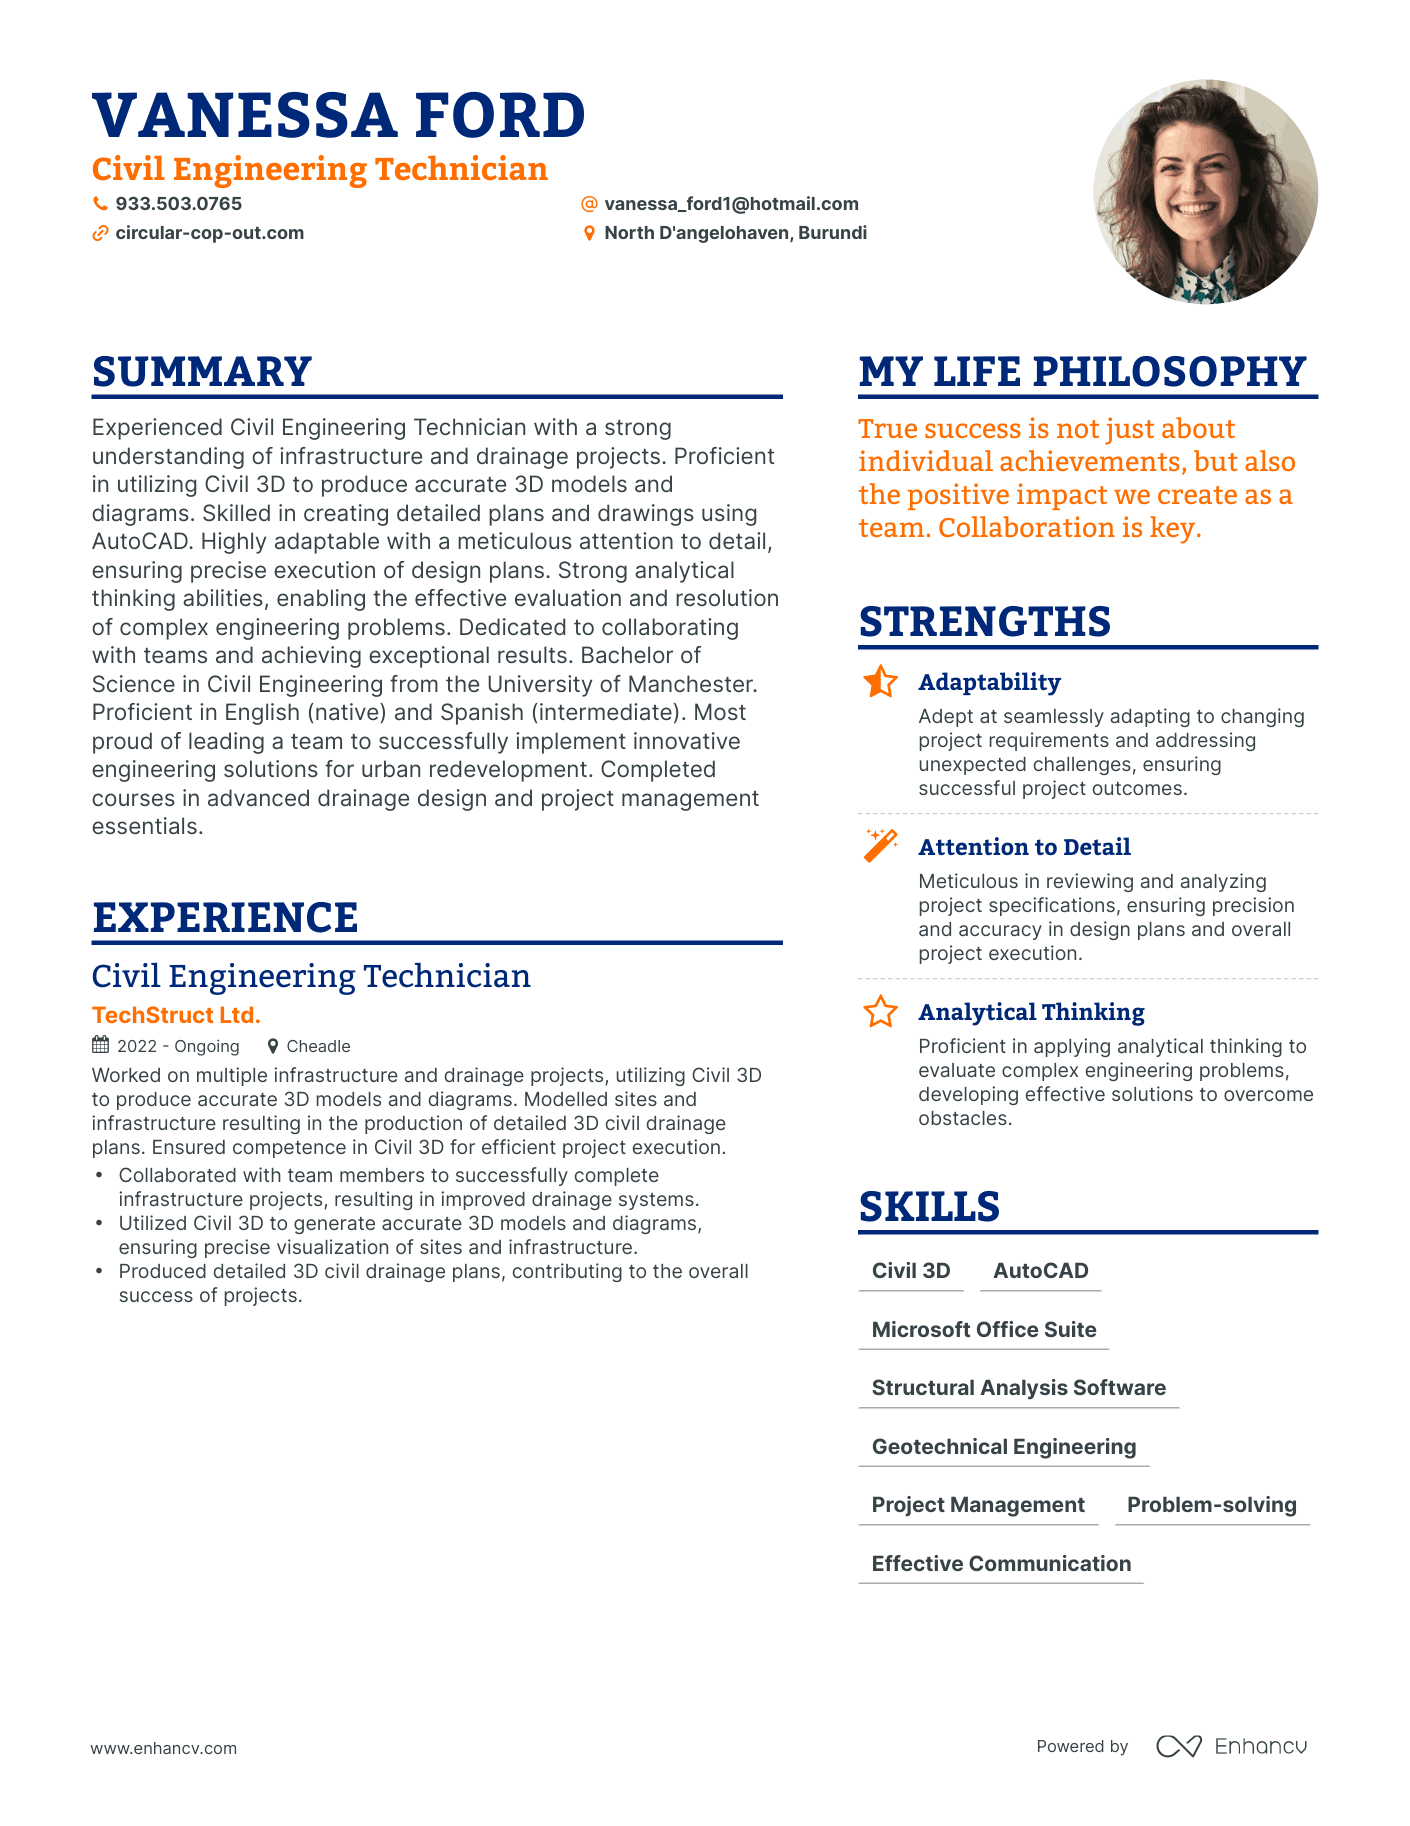 Civil Engineering Technician resume example